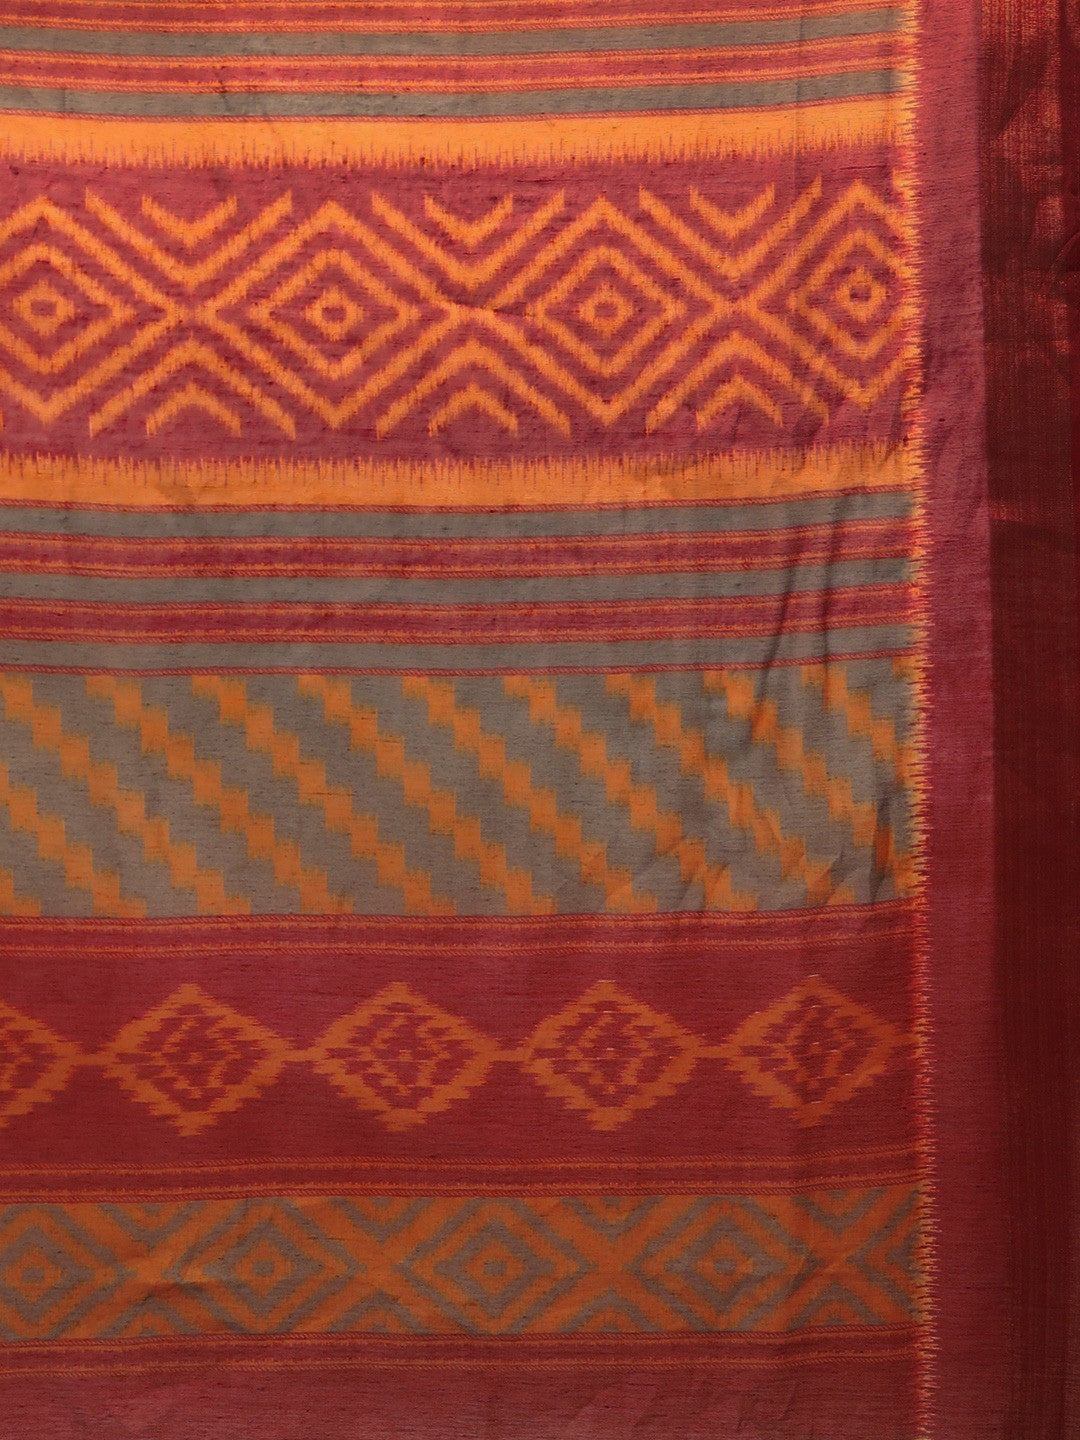 Women's Red Art Silk Printed Saree - Ahika